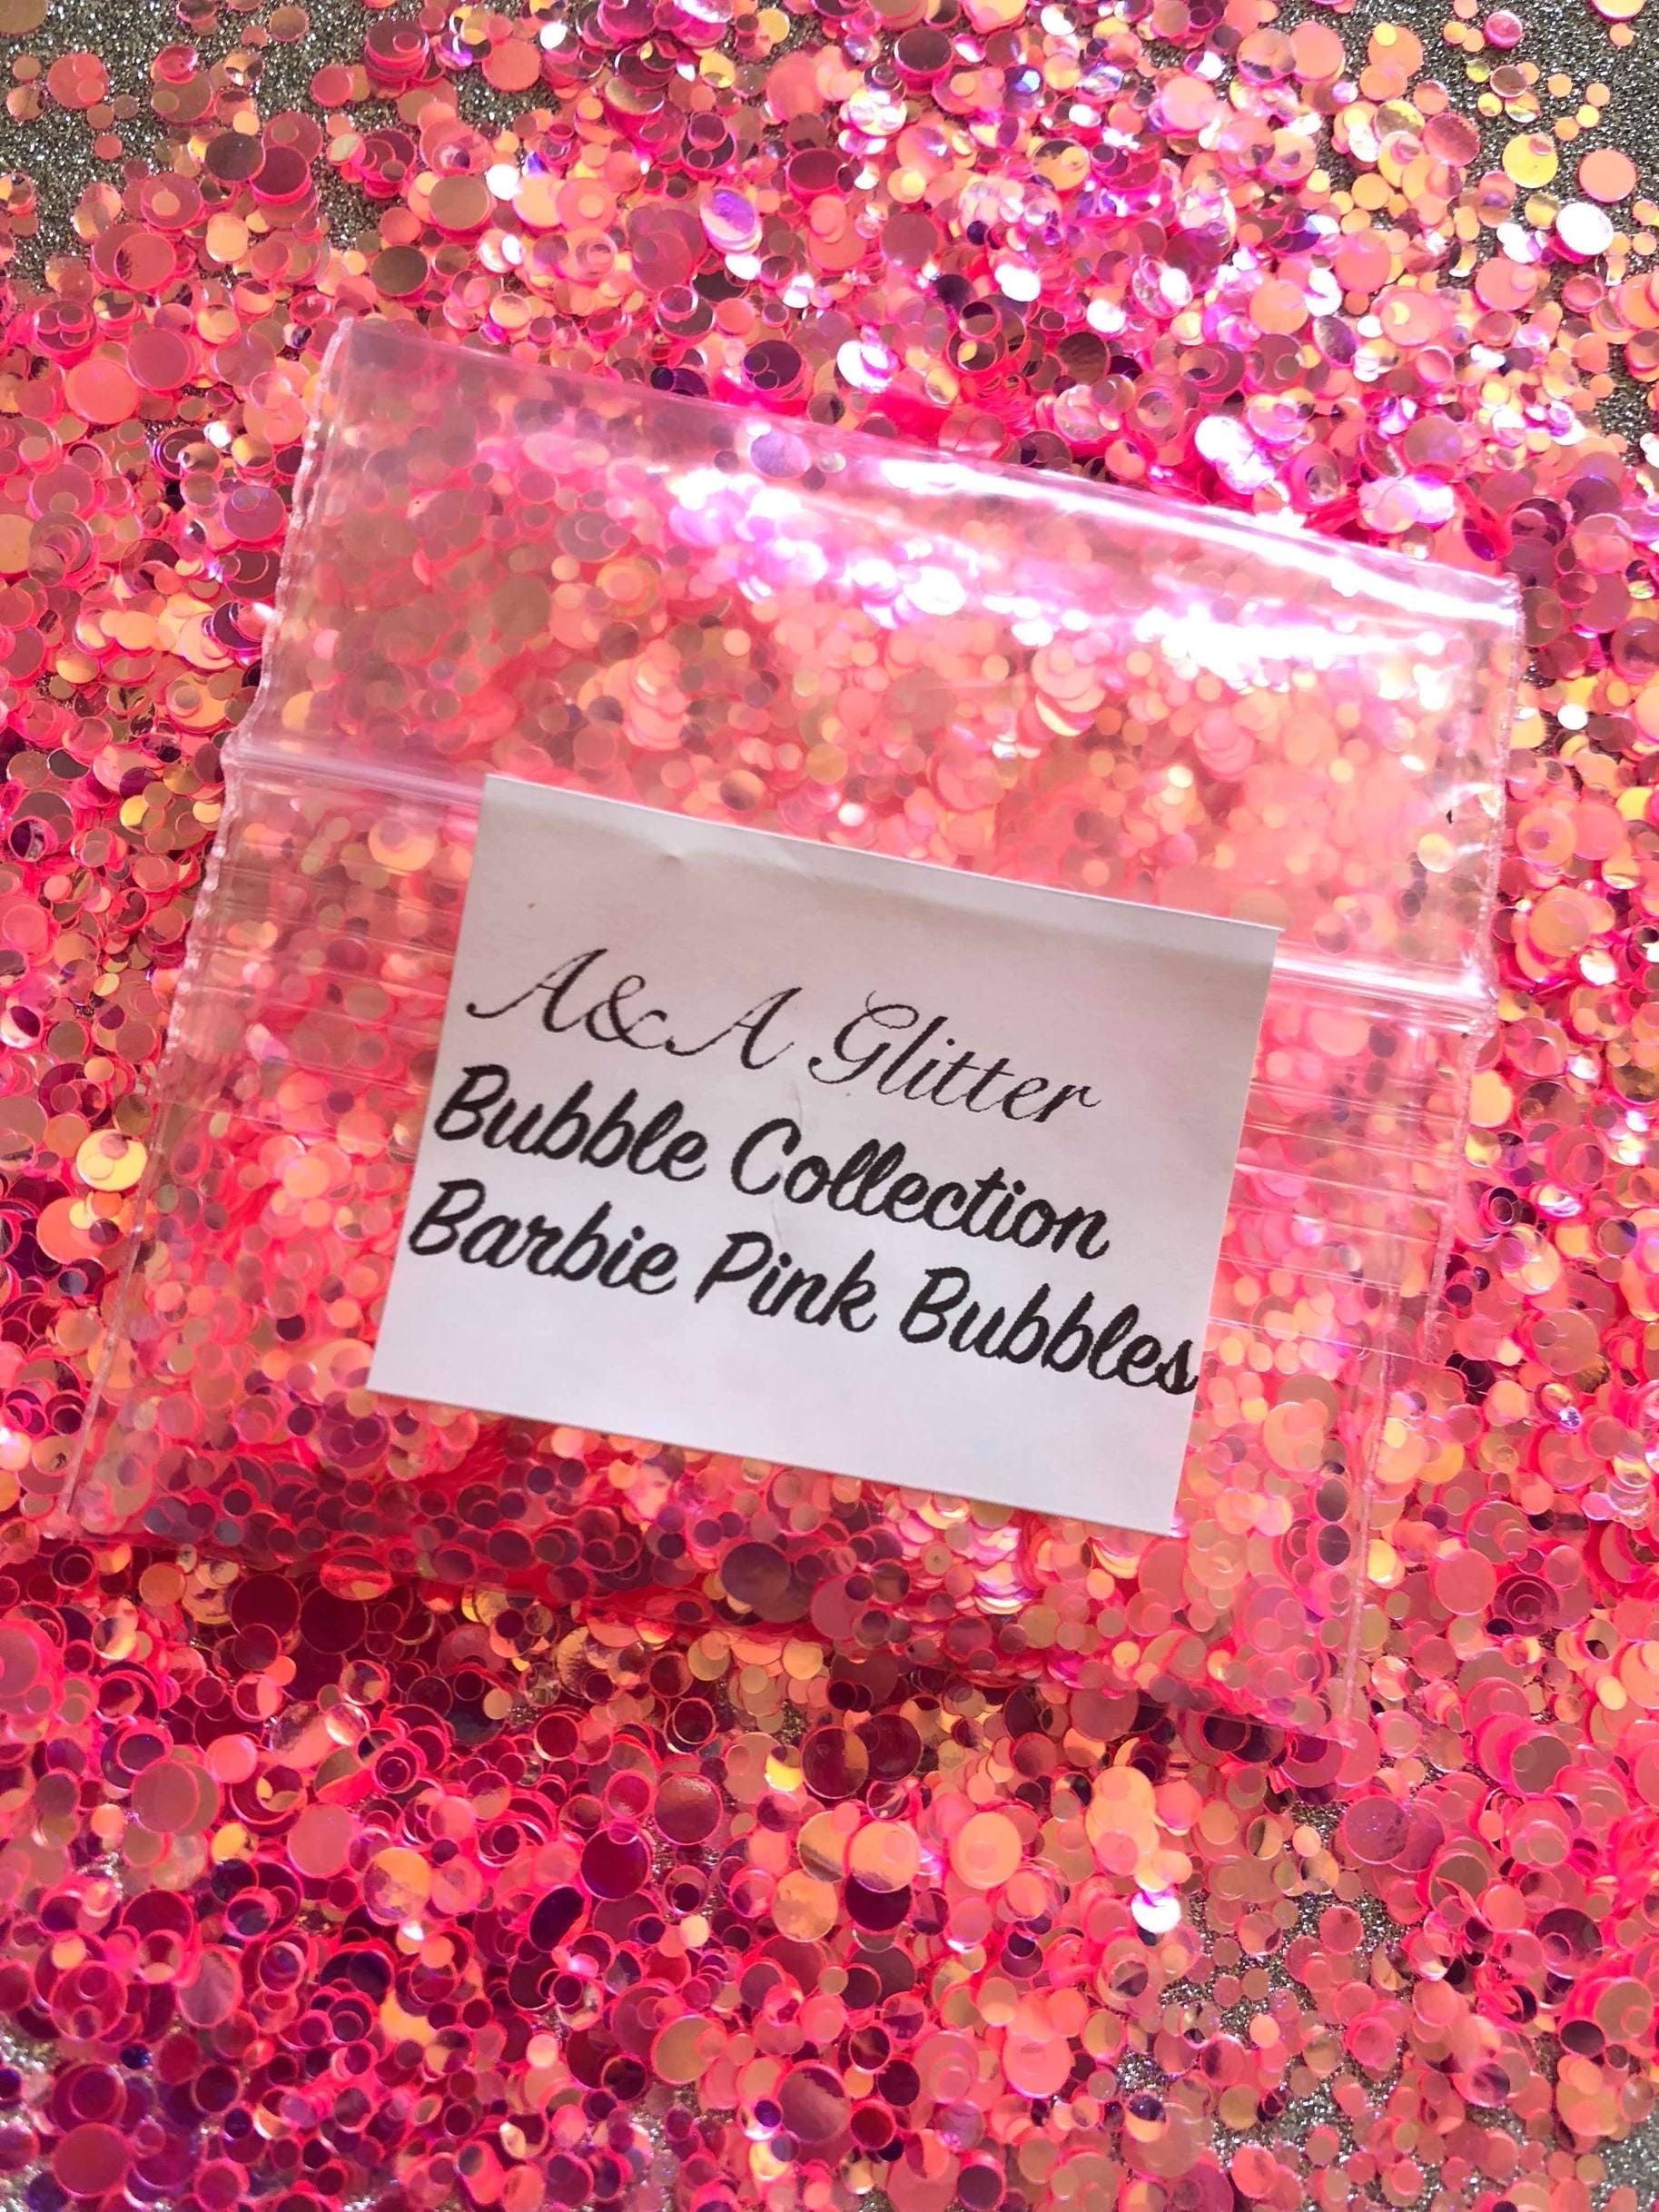 Bubbles Collection